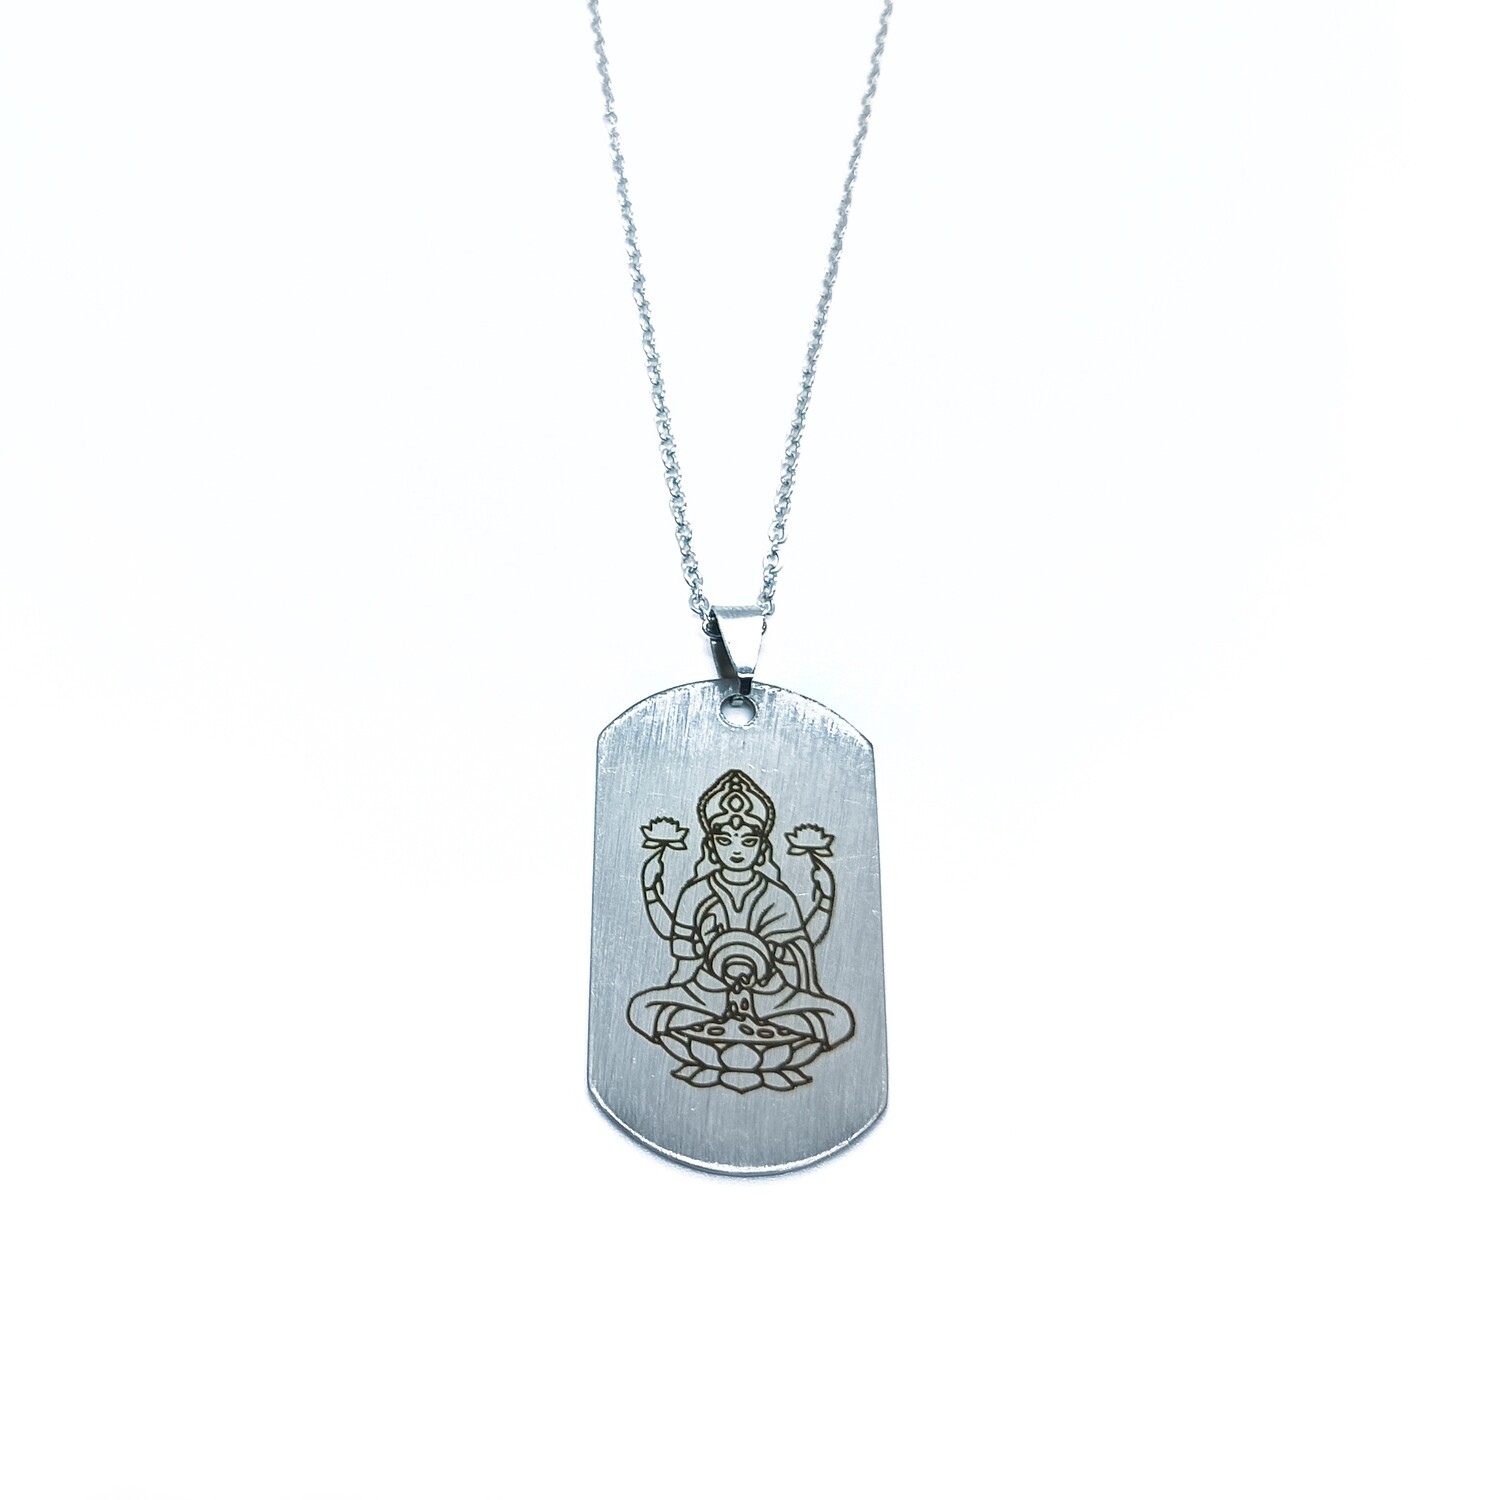 Goddess Laxmi necklace engraved